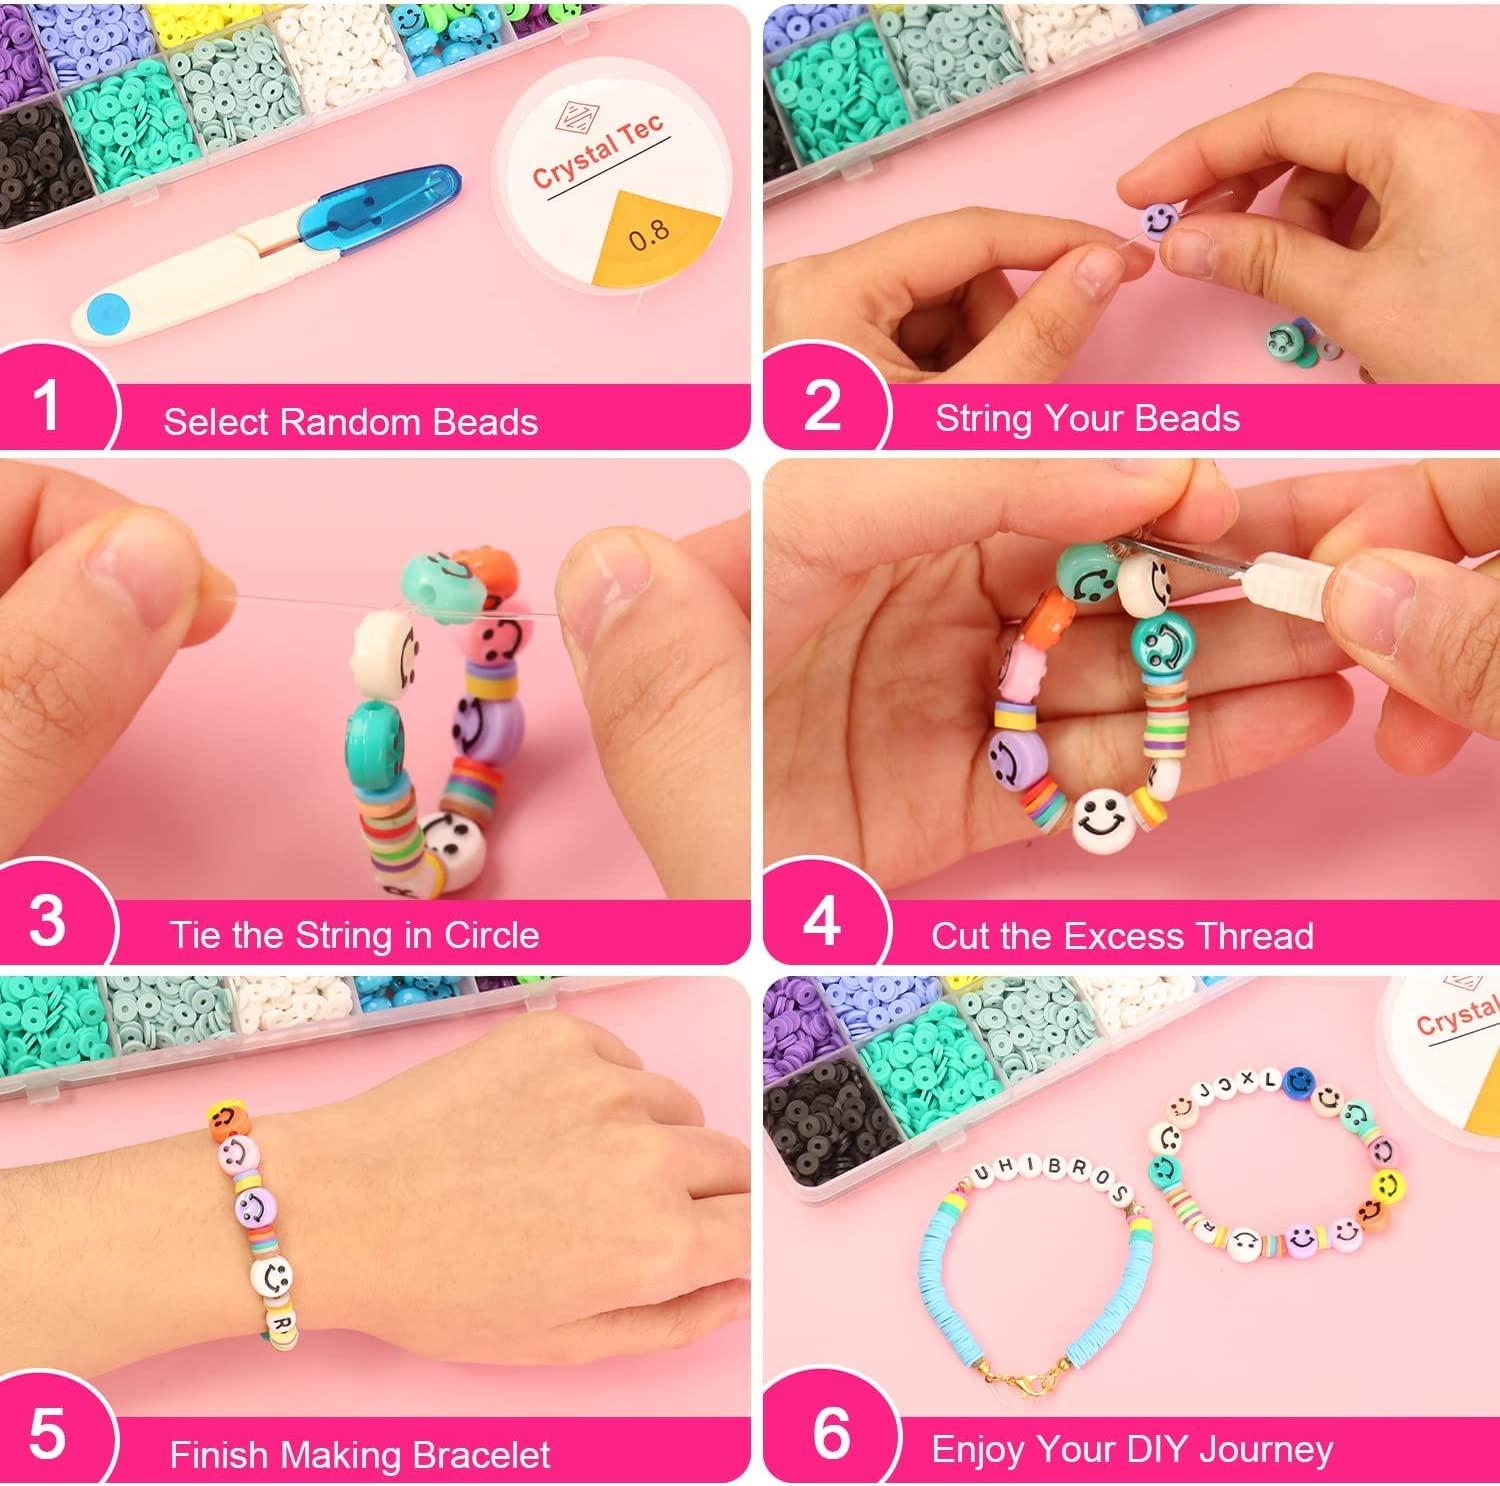 7230 Pcs Clay Bead Kit for Making Bracelets & Jewelry, 2 Box Kit for Kids